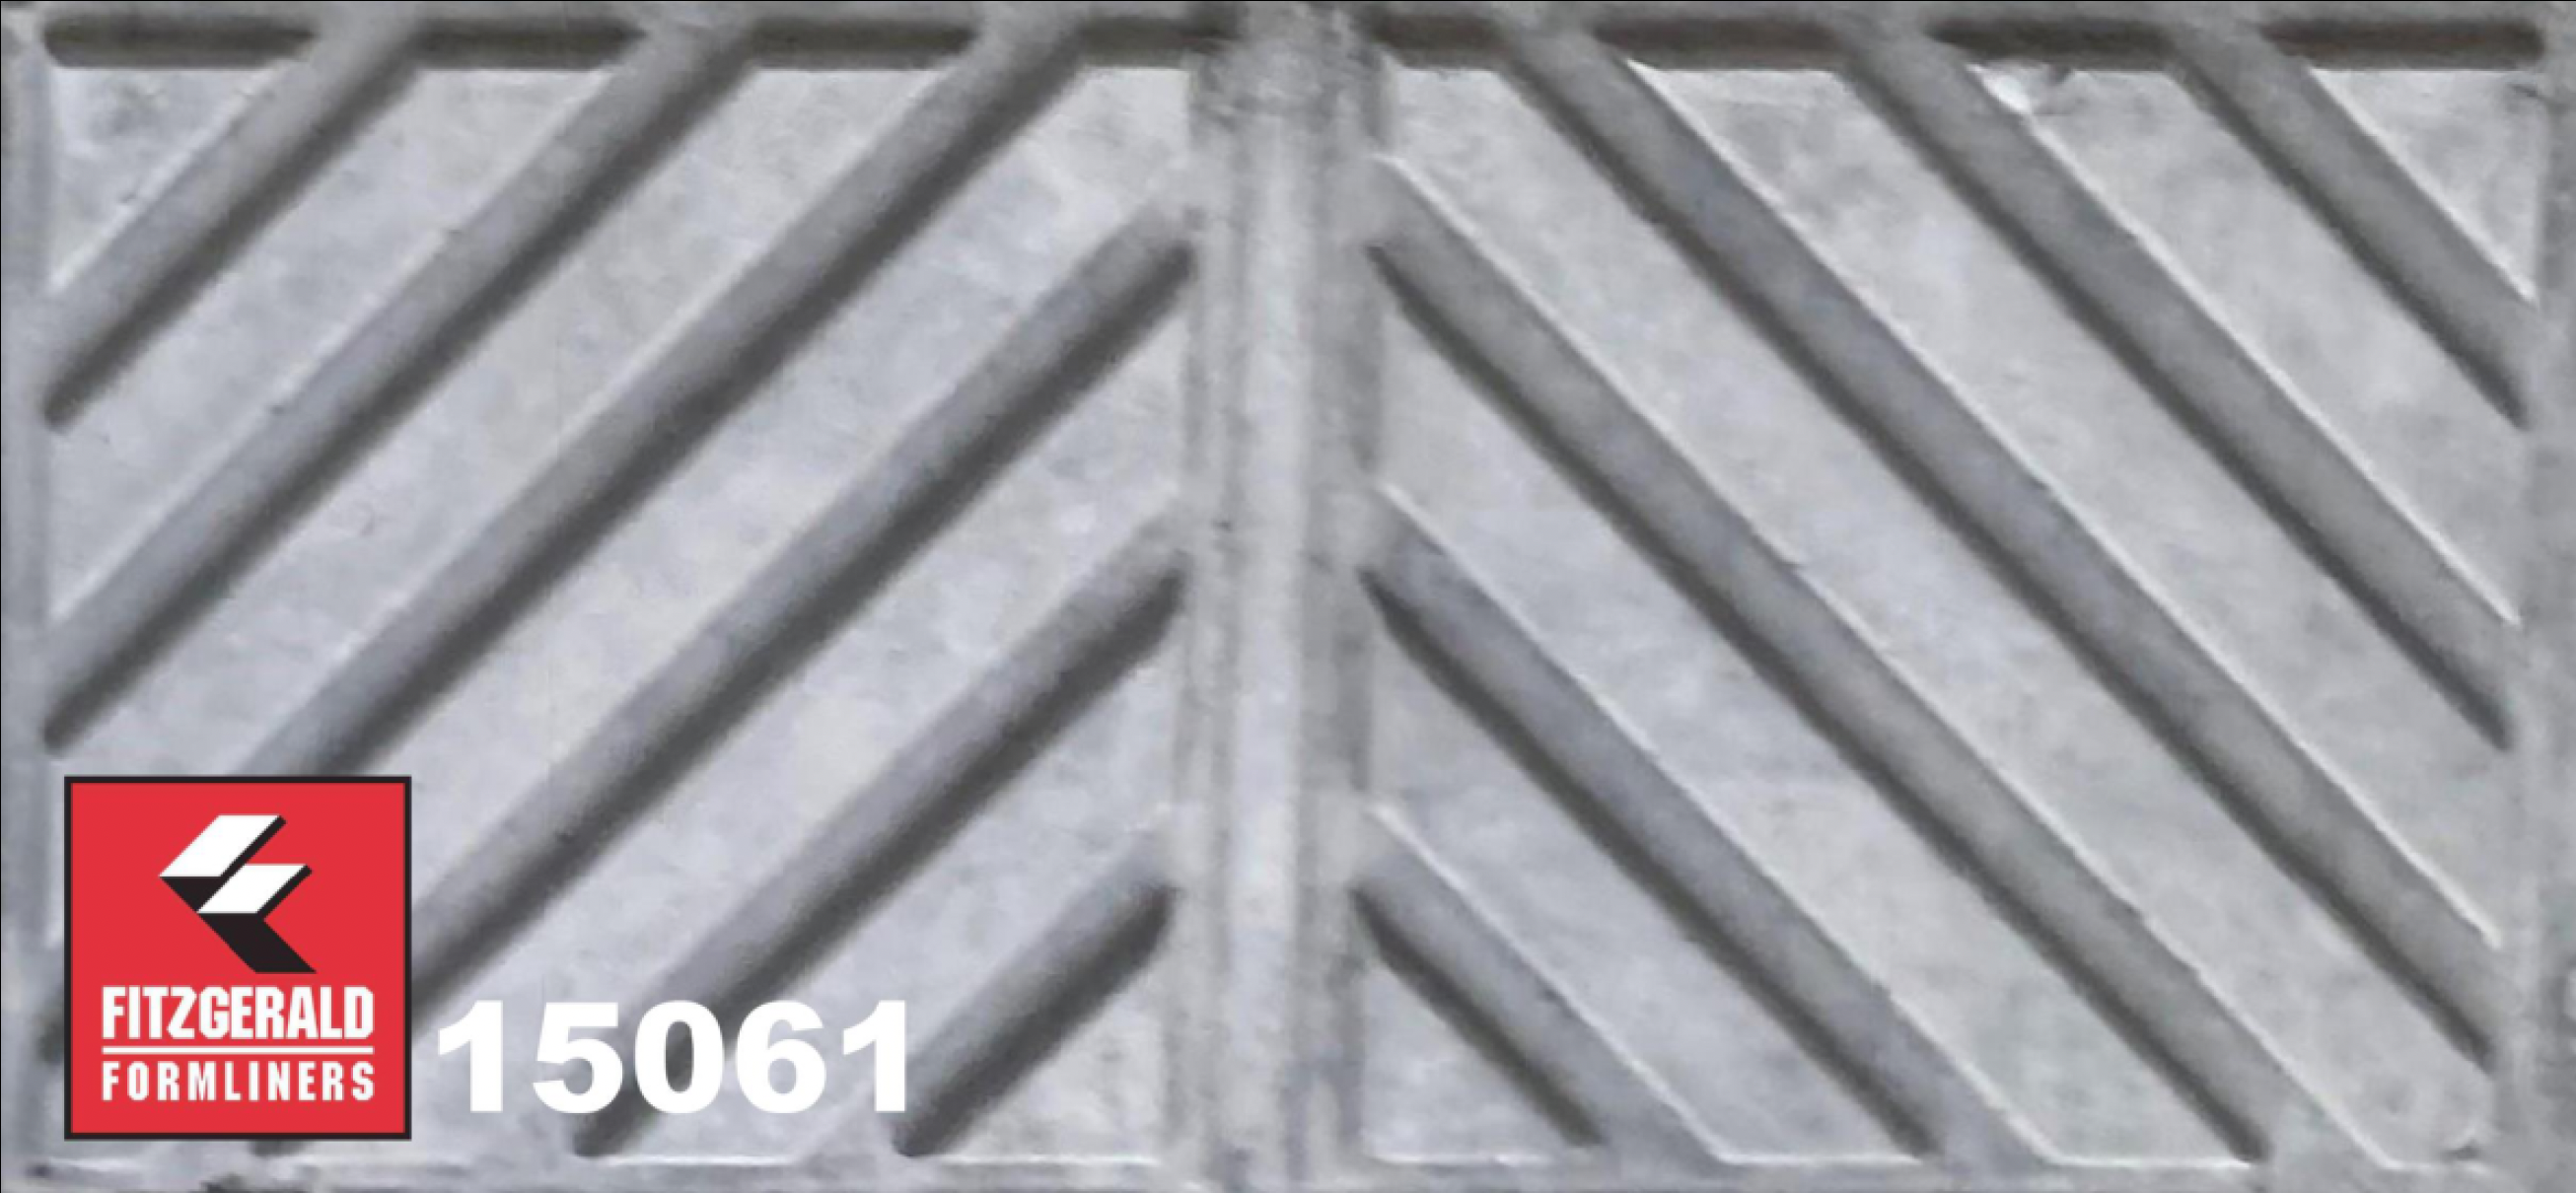 15061 Kew Gardens concrete formliner